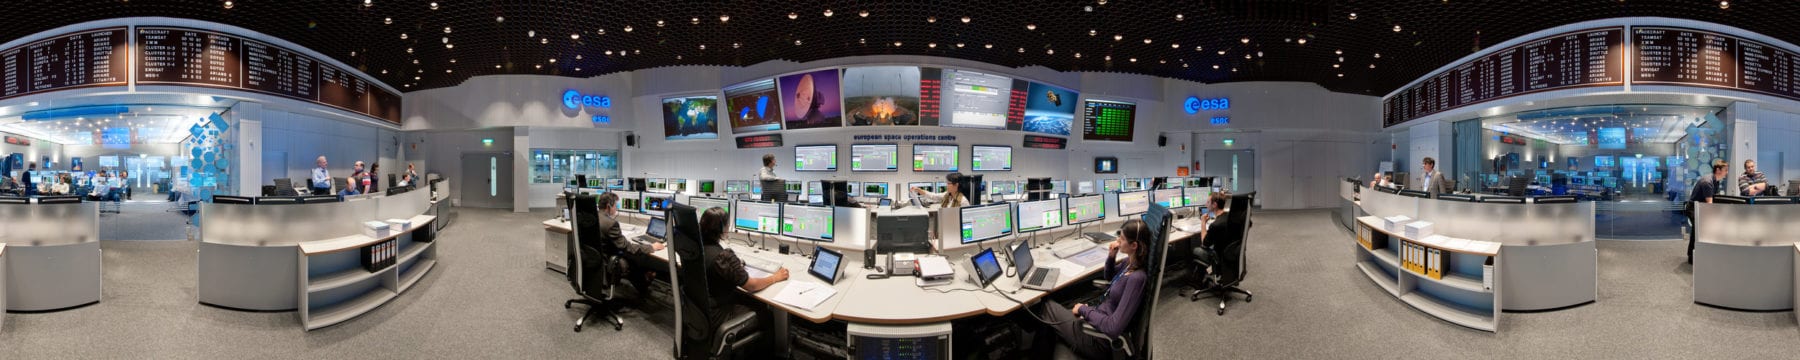 ESA Main Control Room, Darmstadt